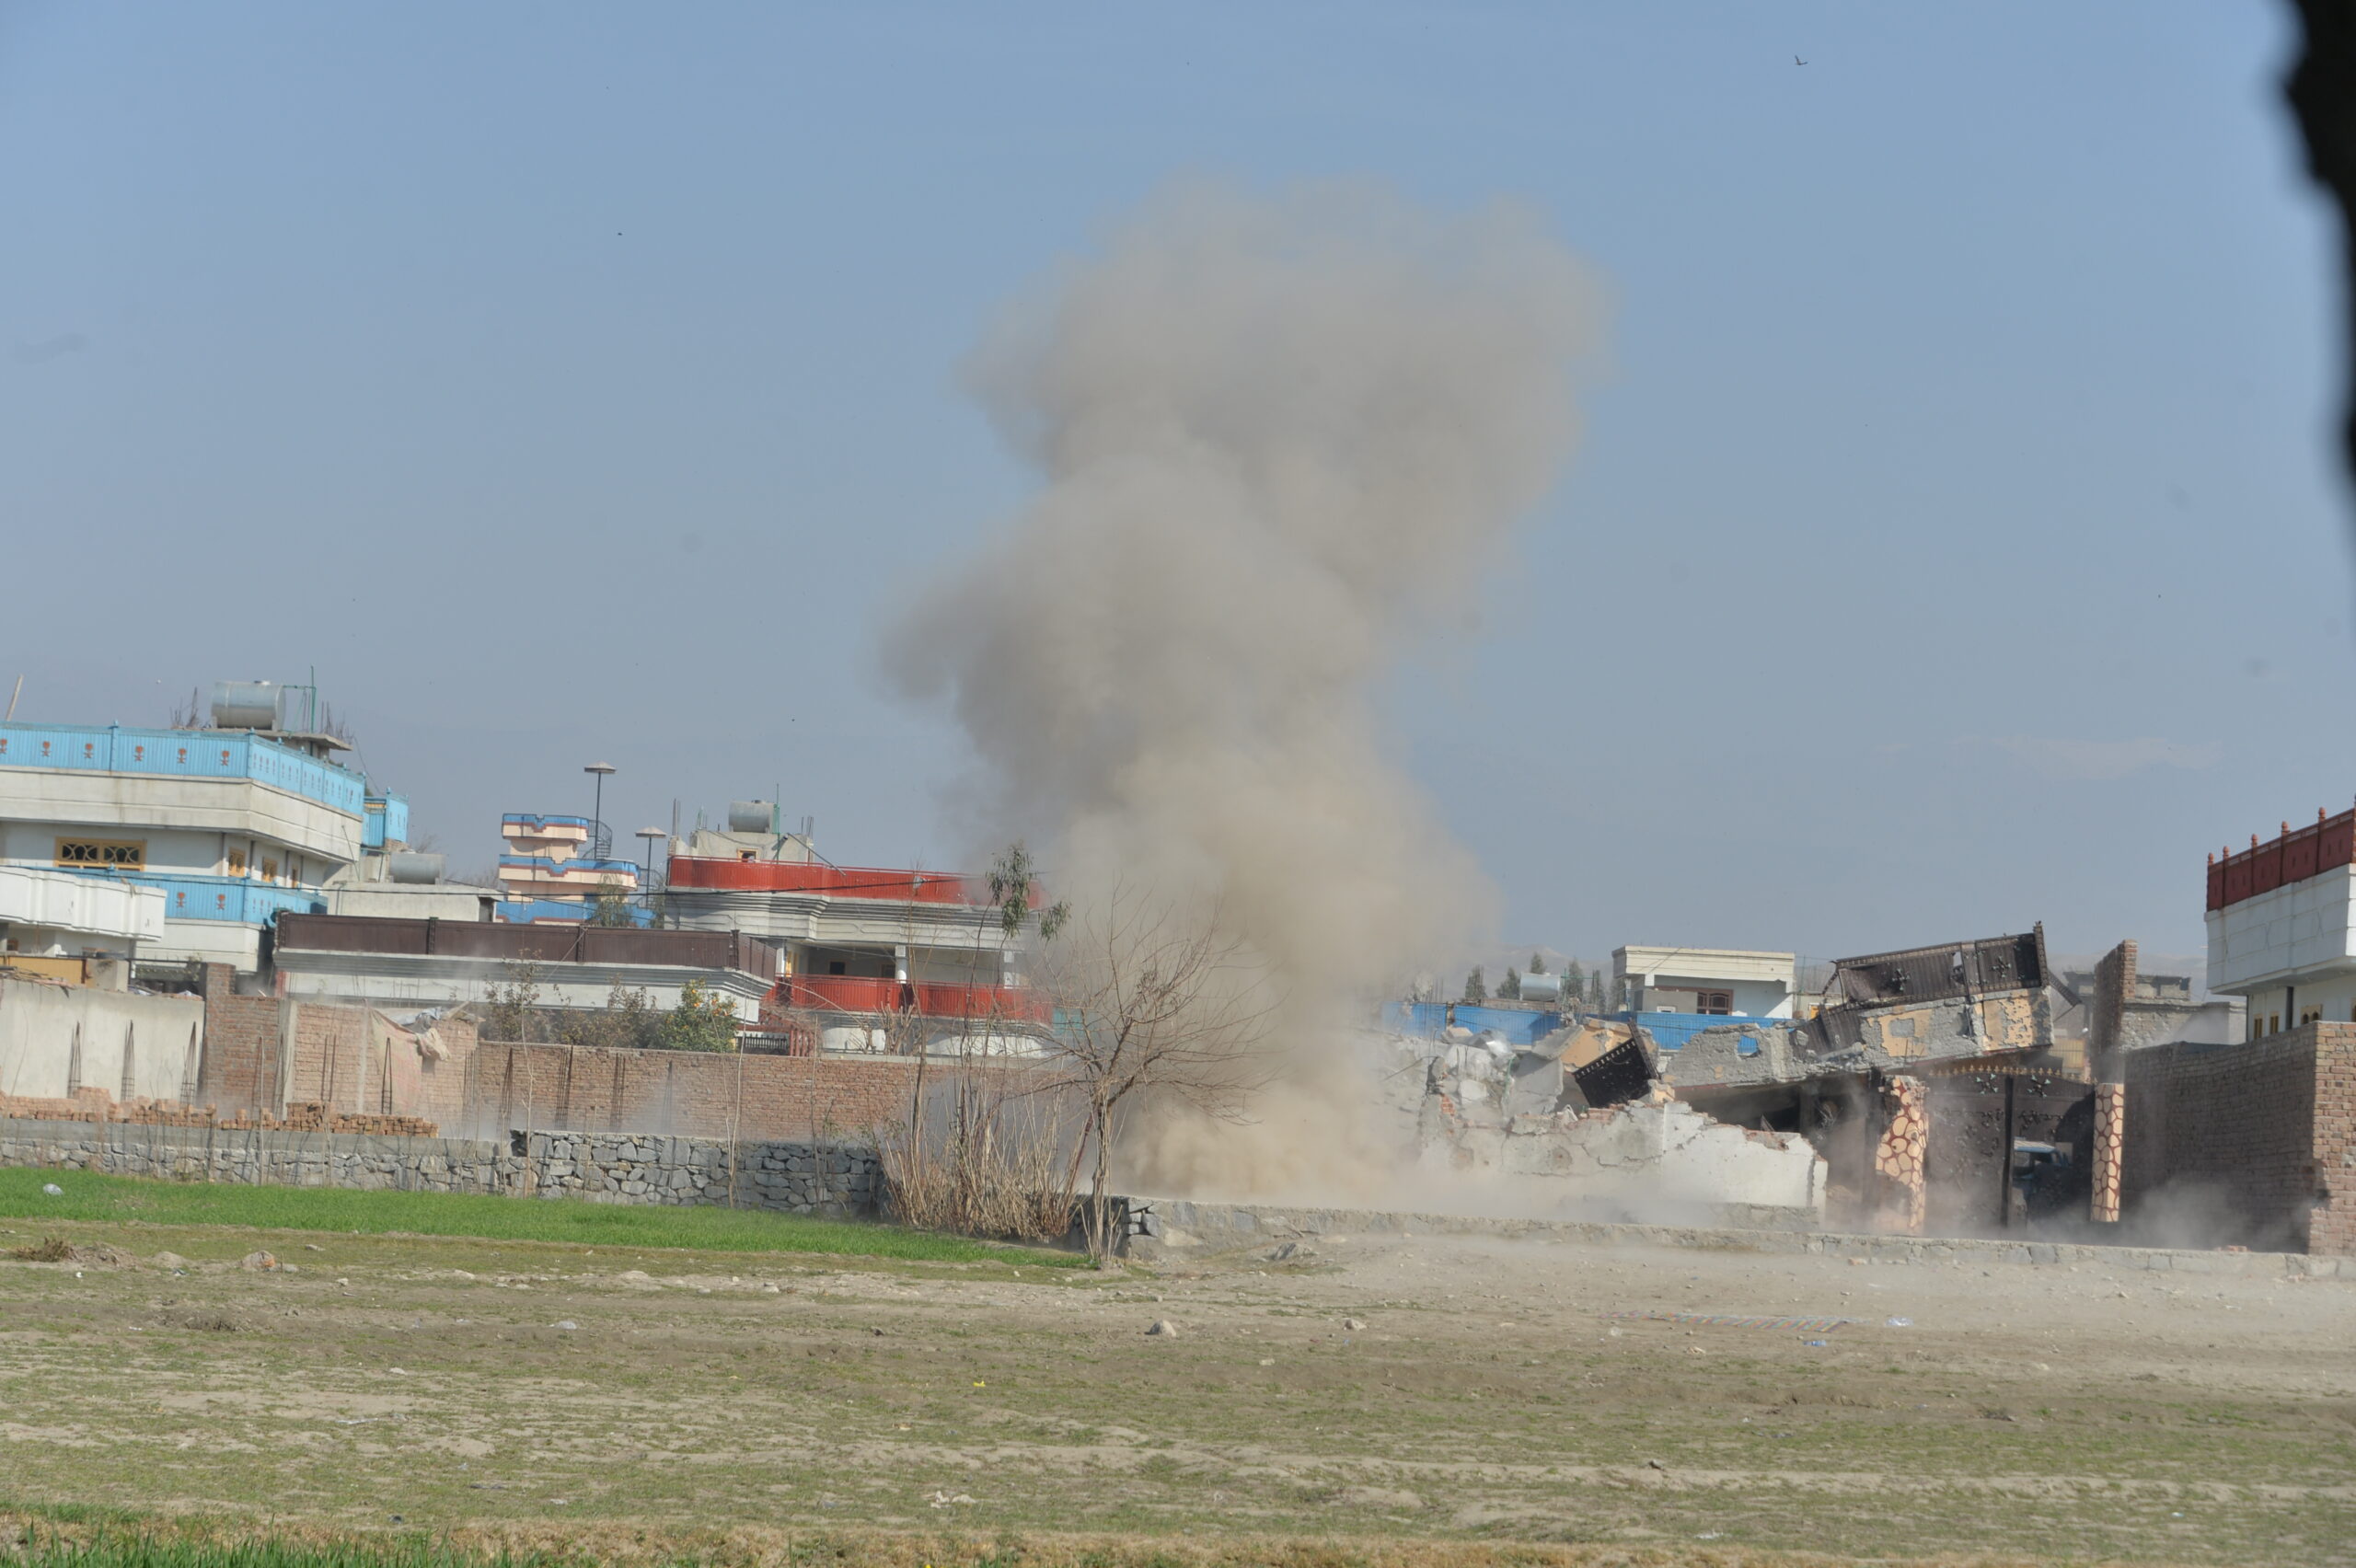  Two Taliban intelligence officers were killed in a roadside bomb explosion